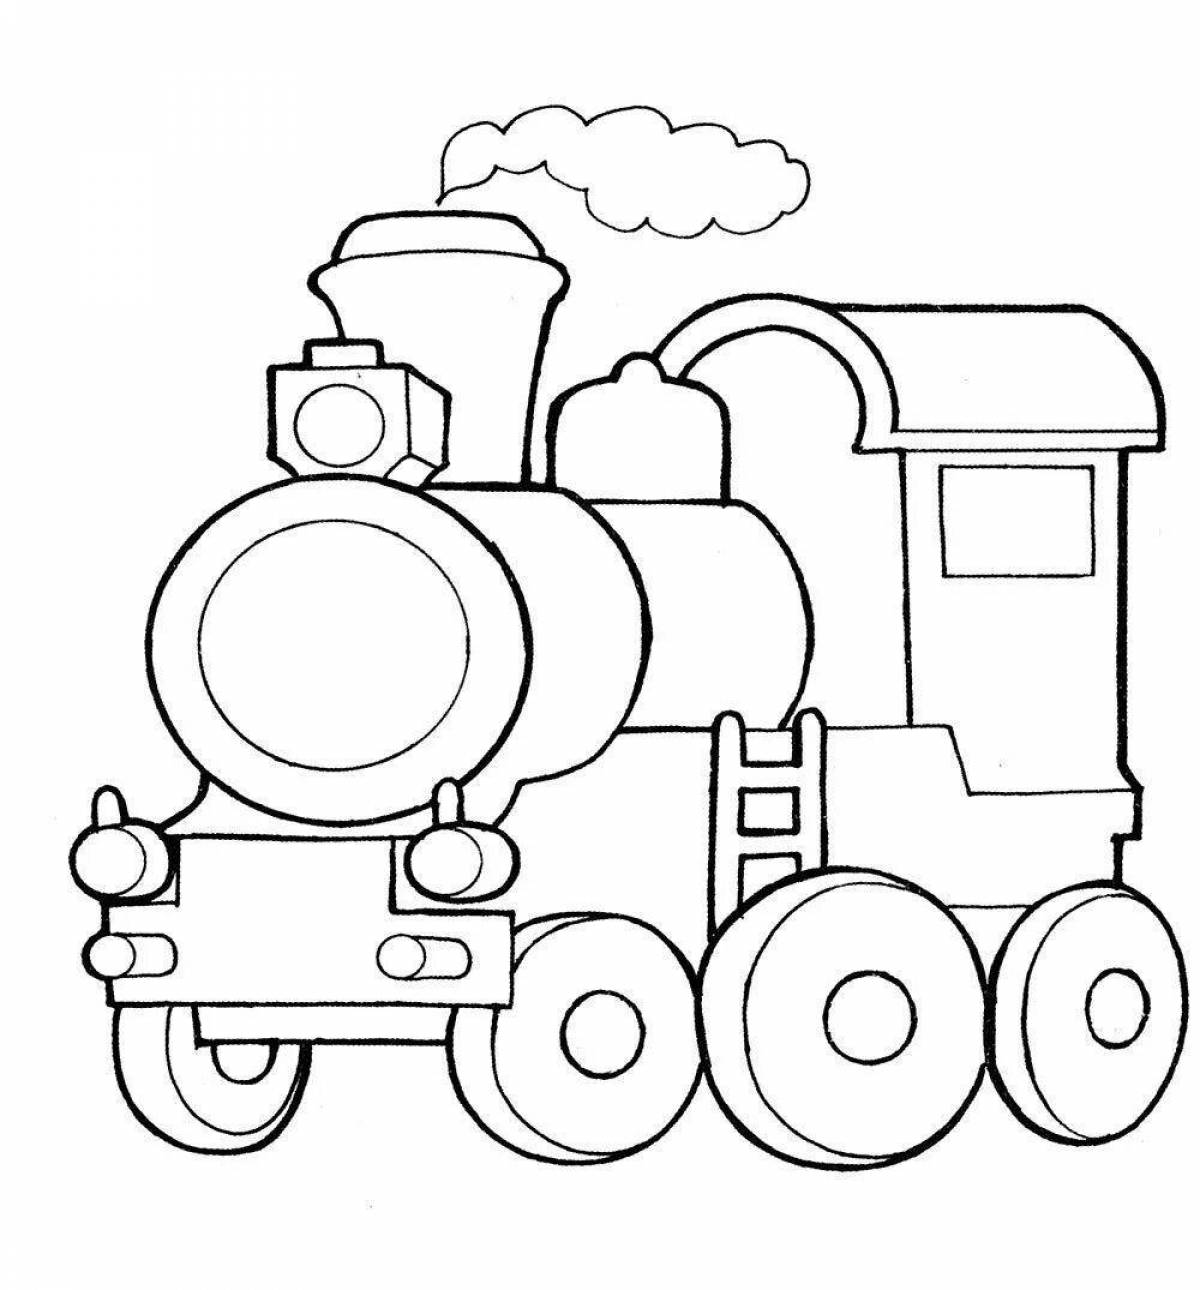 For children 4 5 years old locomotive #2